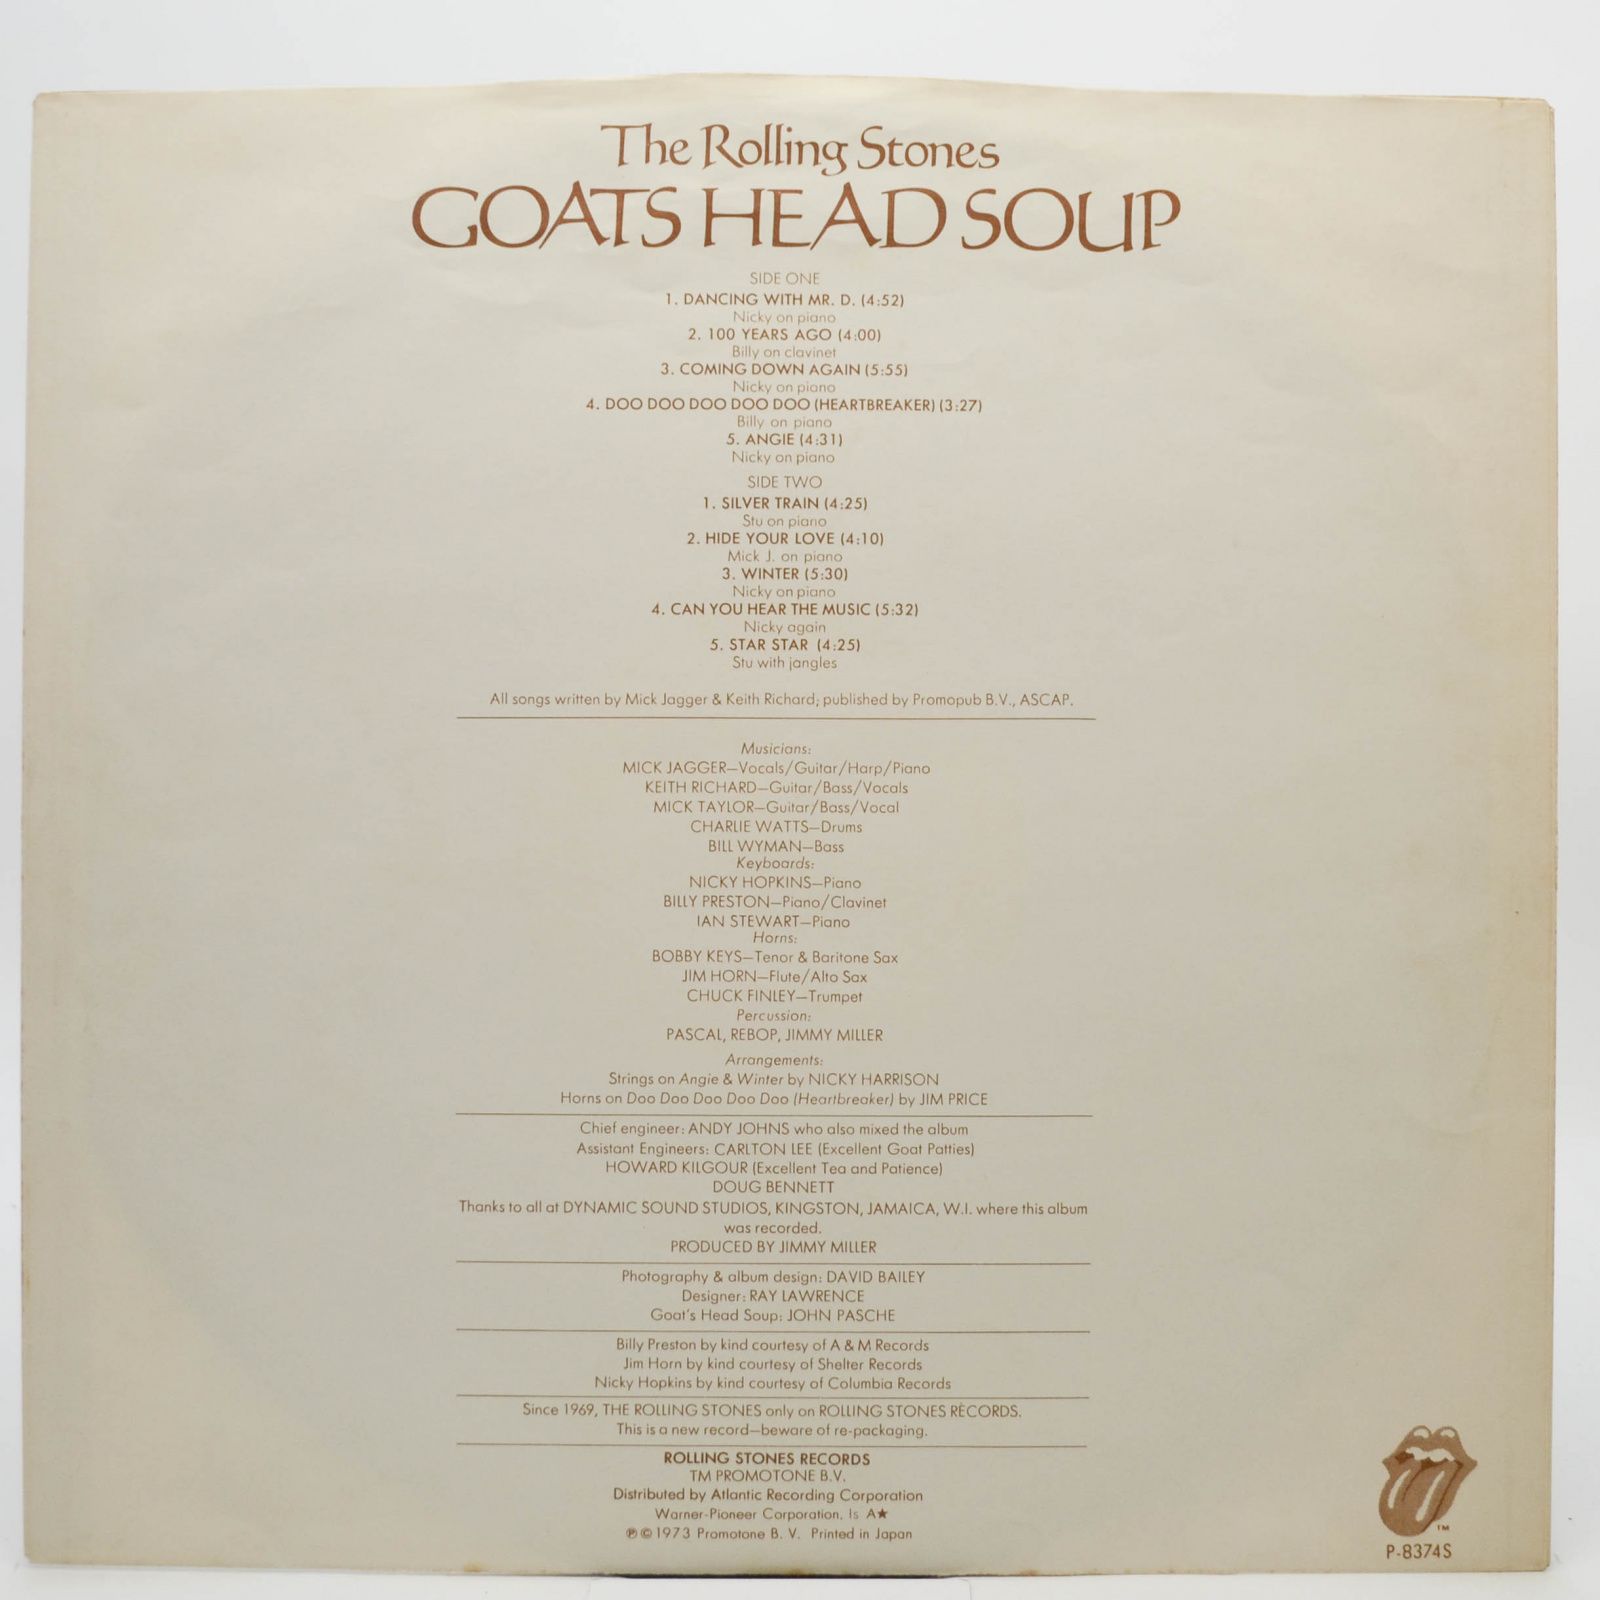 Rolling Stones — Goats Head Soup, 1973